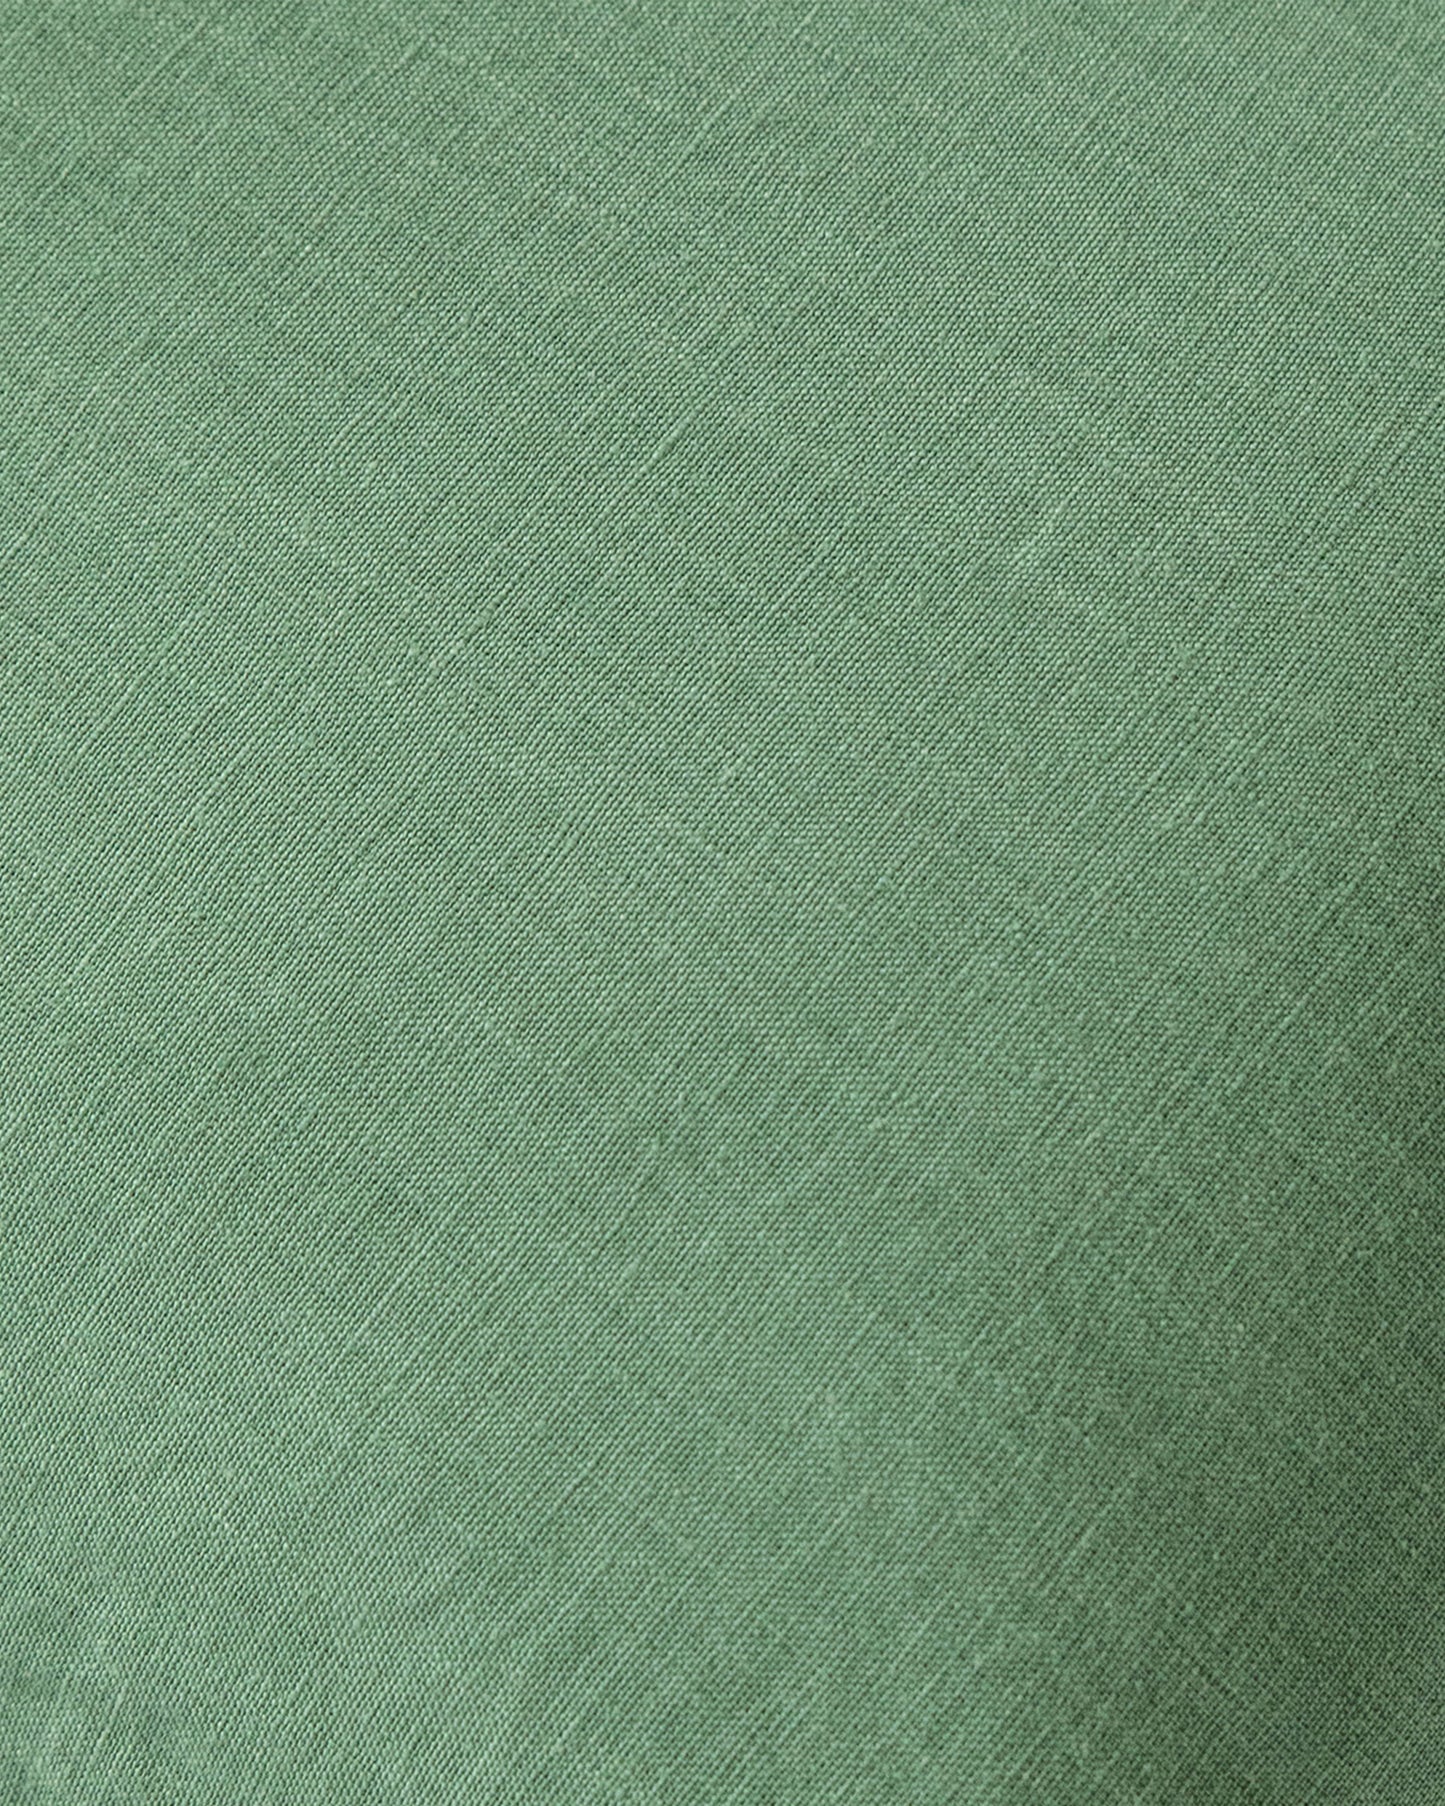 Ruffle trim linen tea towel in Matcha green - MagicLinen